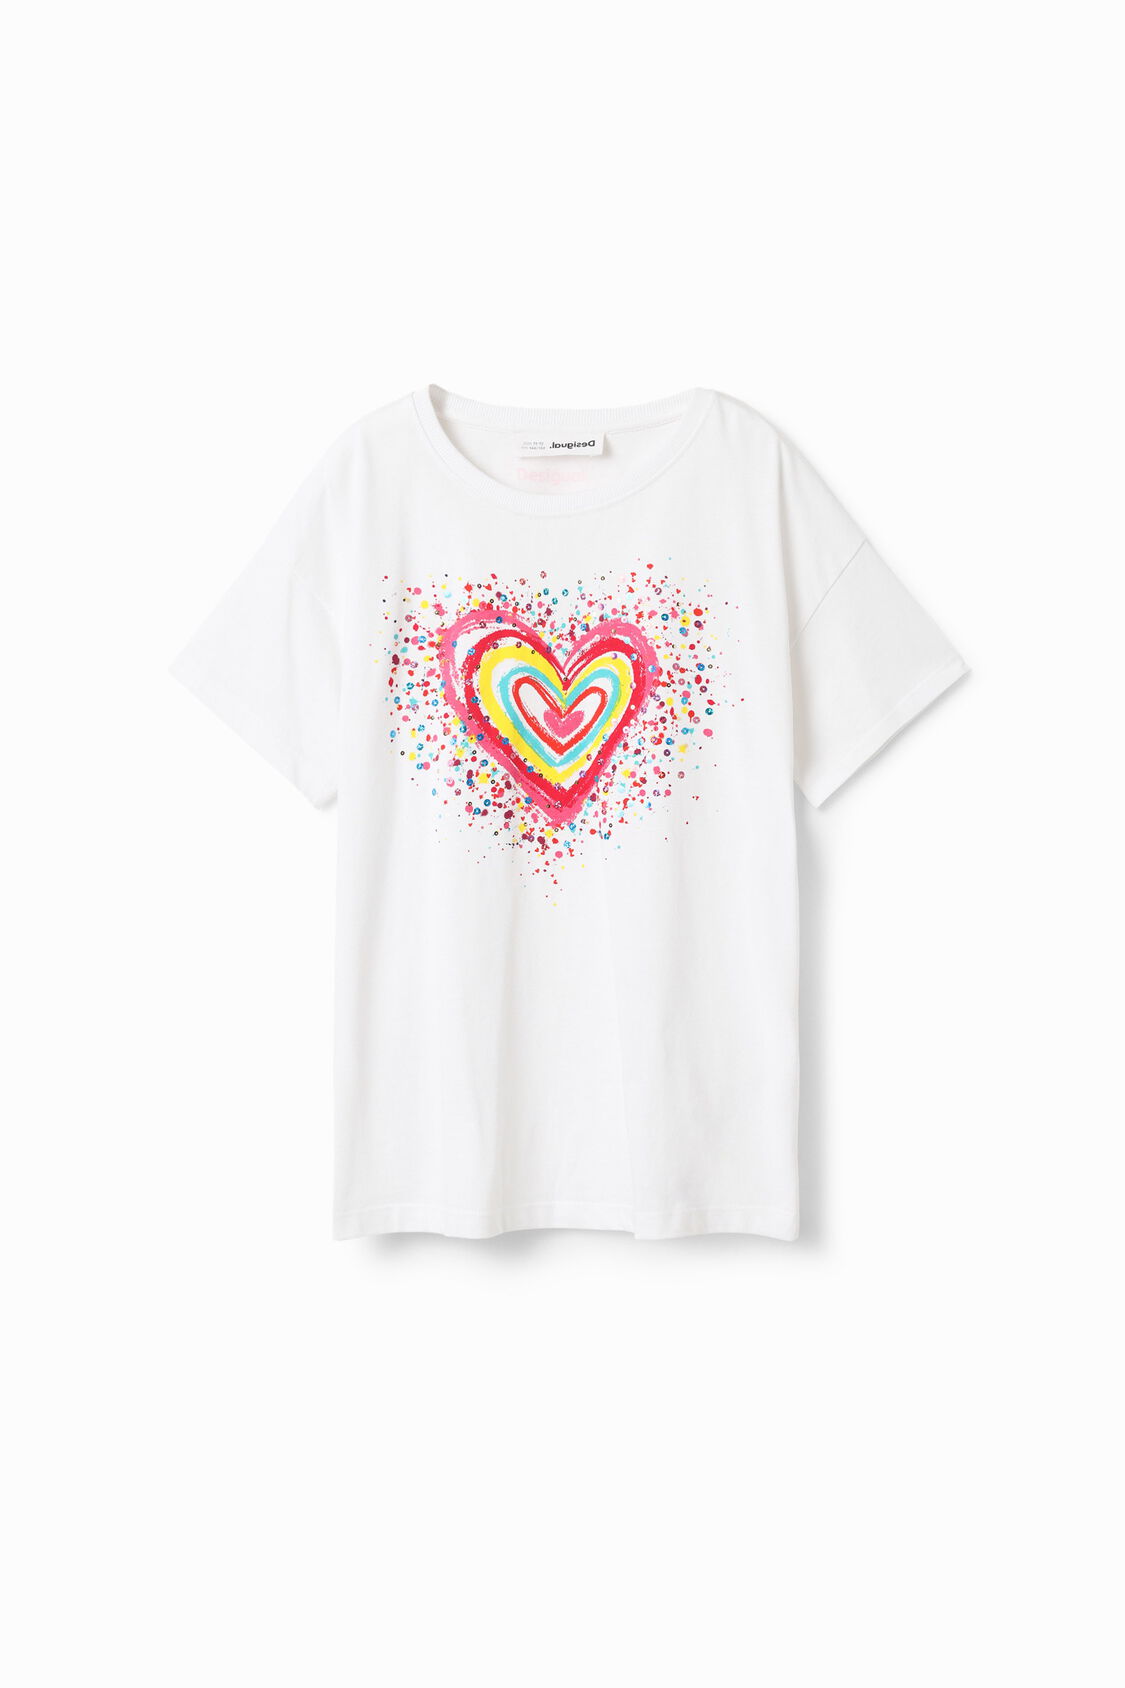 Camiseta corazón lentejuelas de I Desigual.com